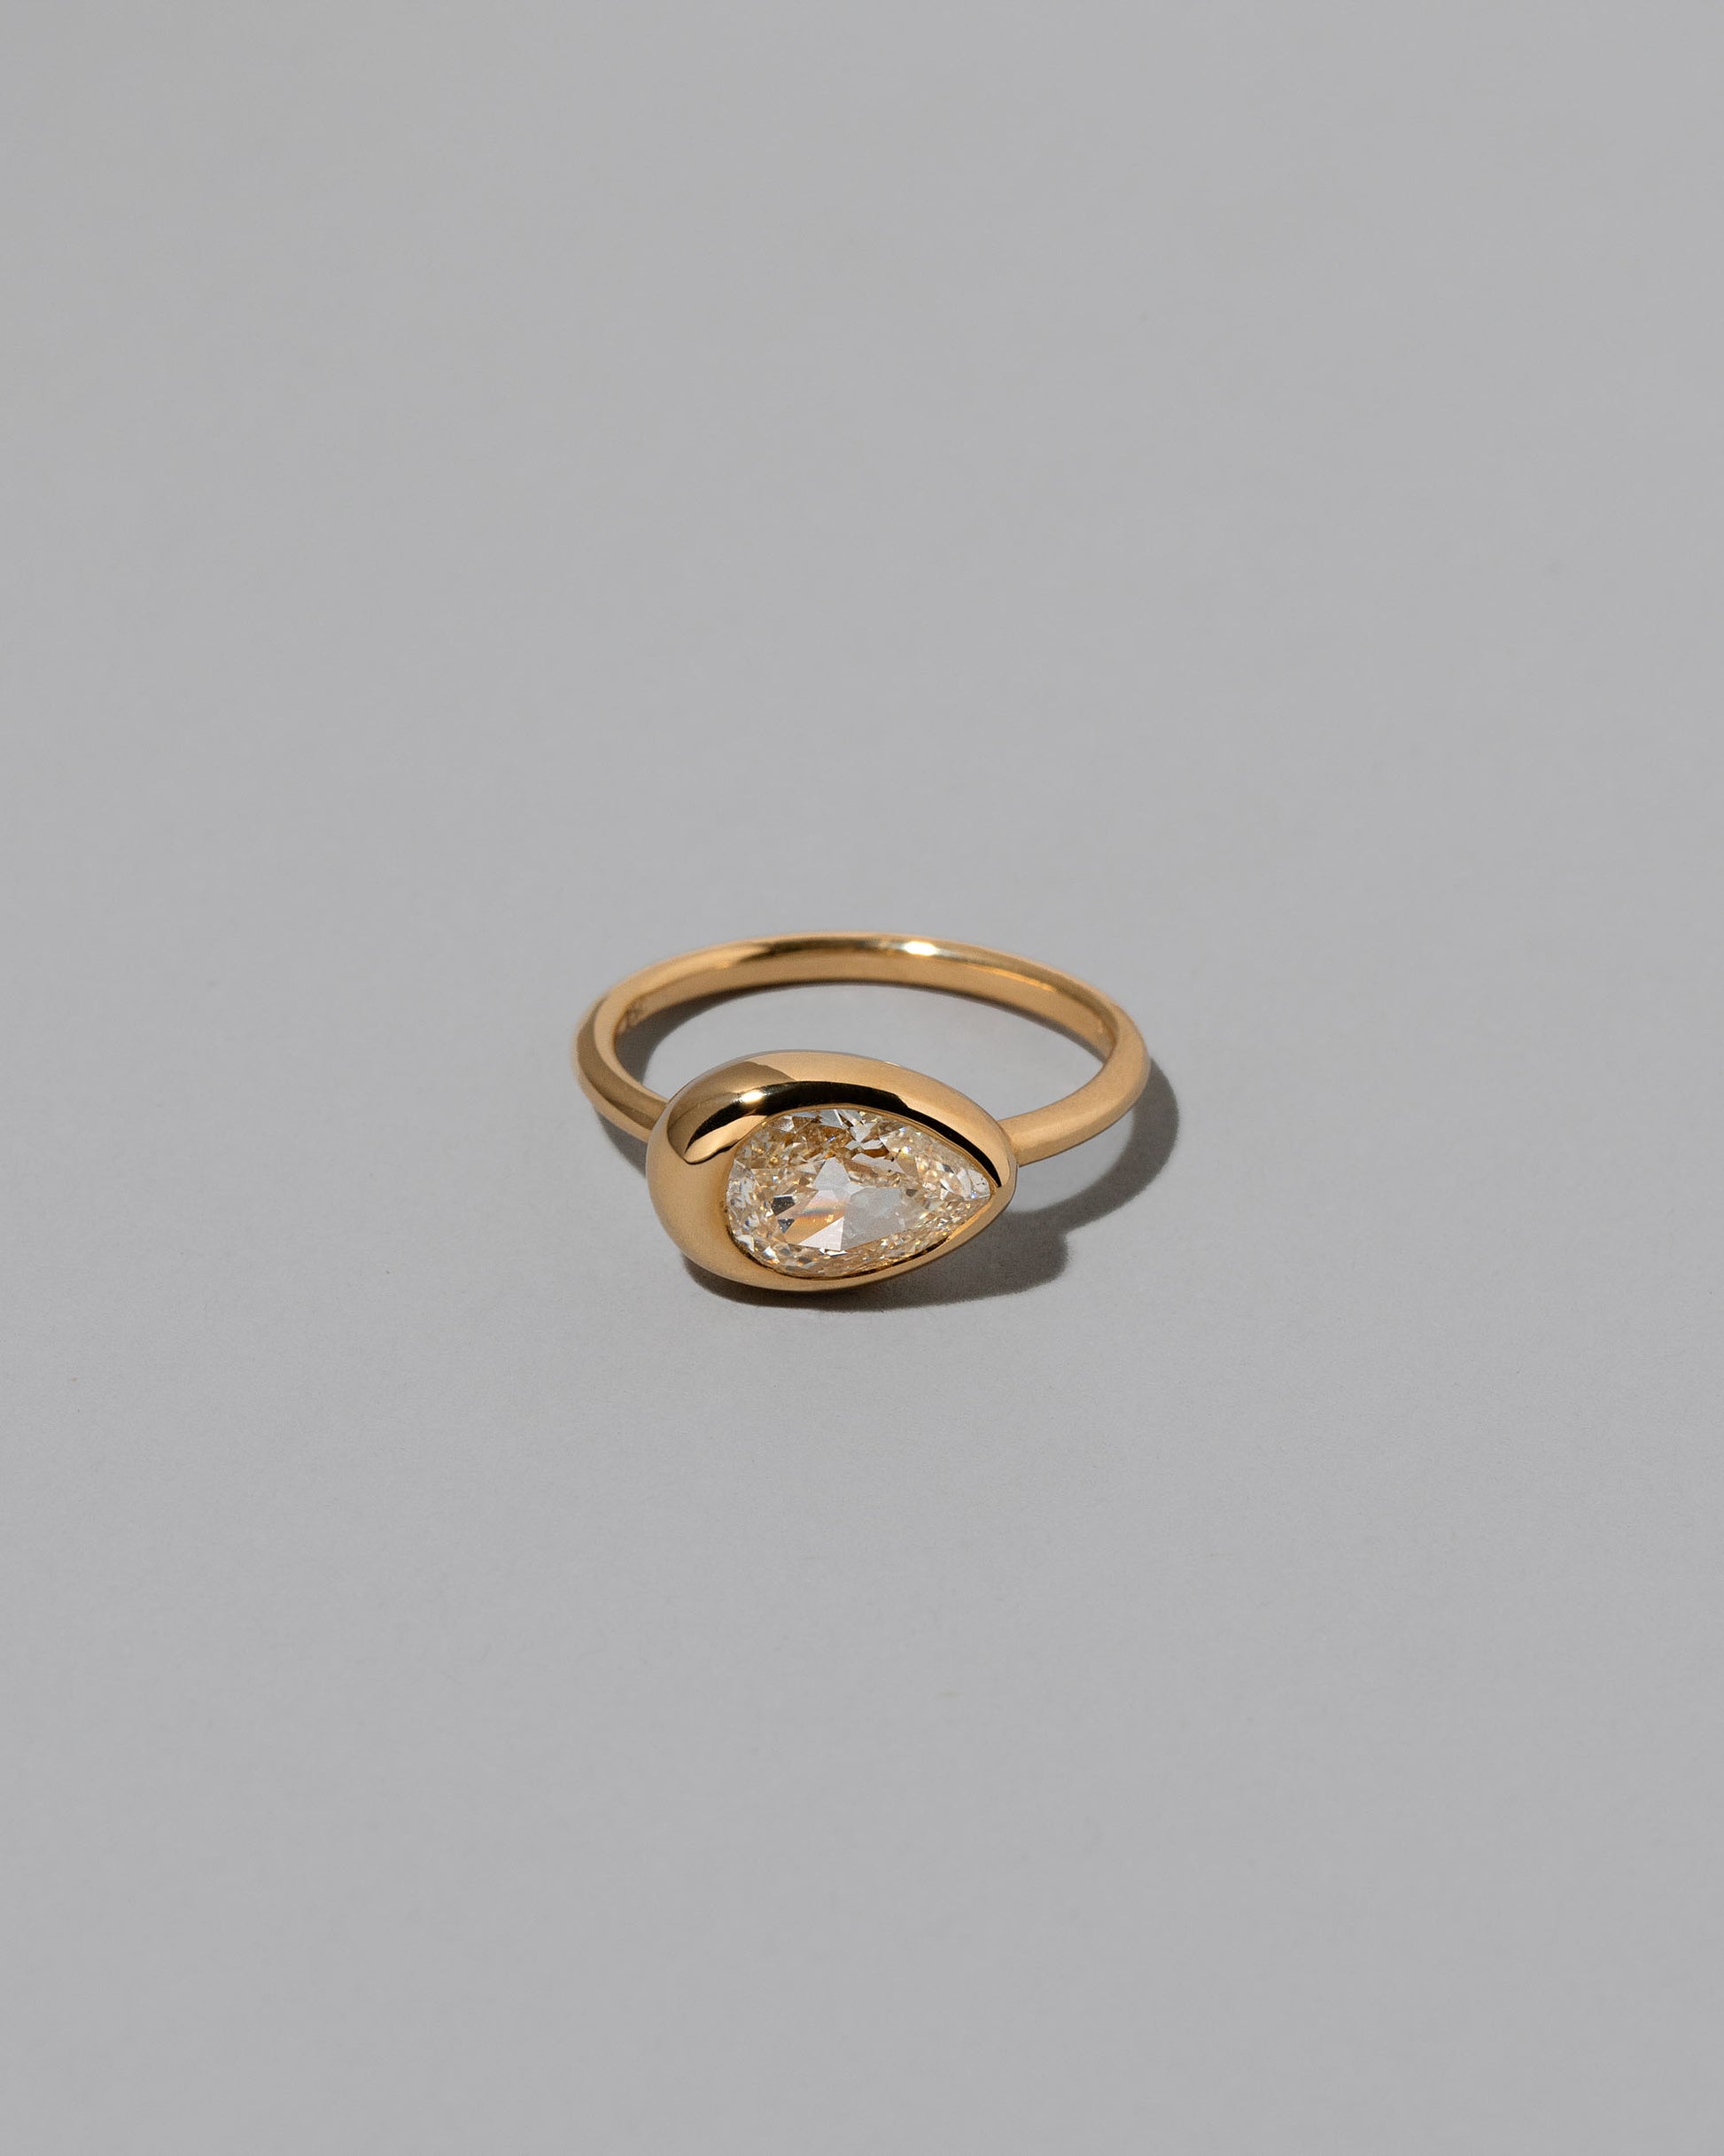 Diamond Align Ring on light color background.